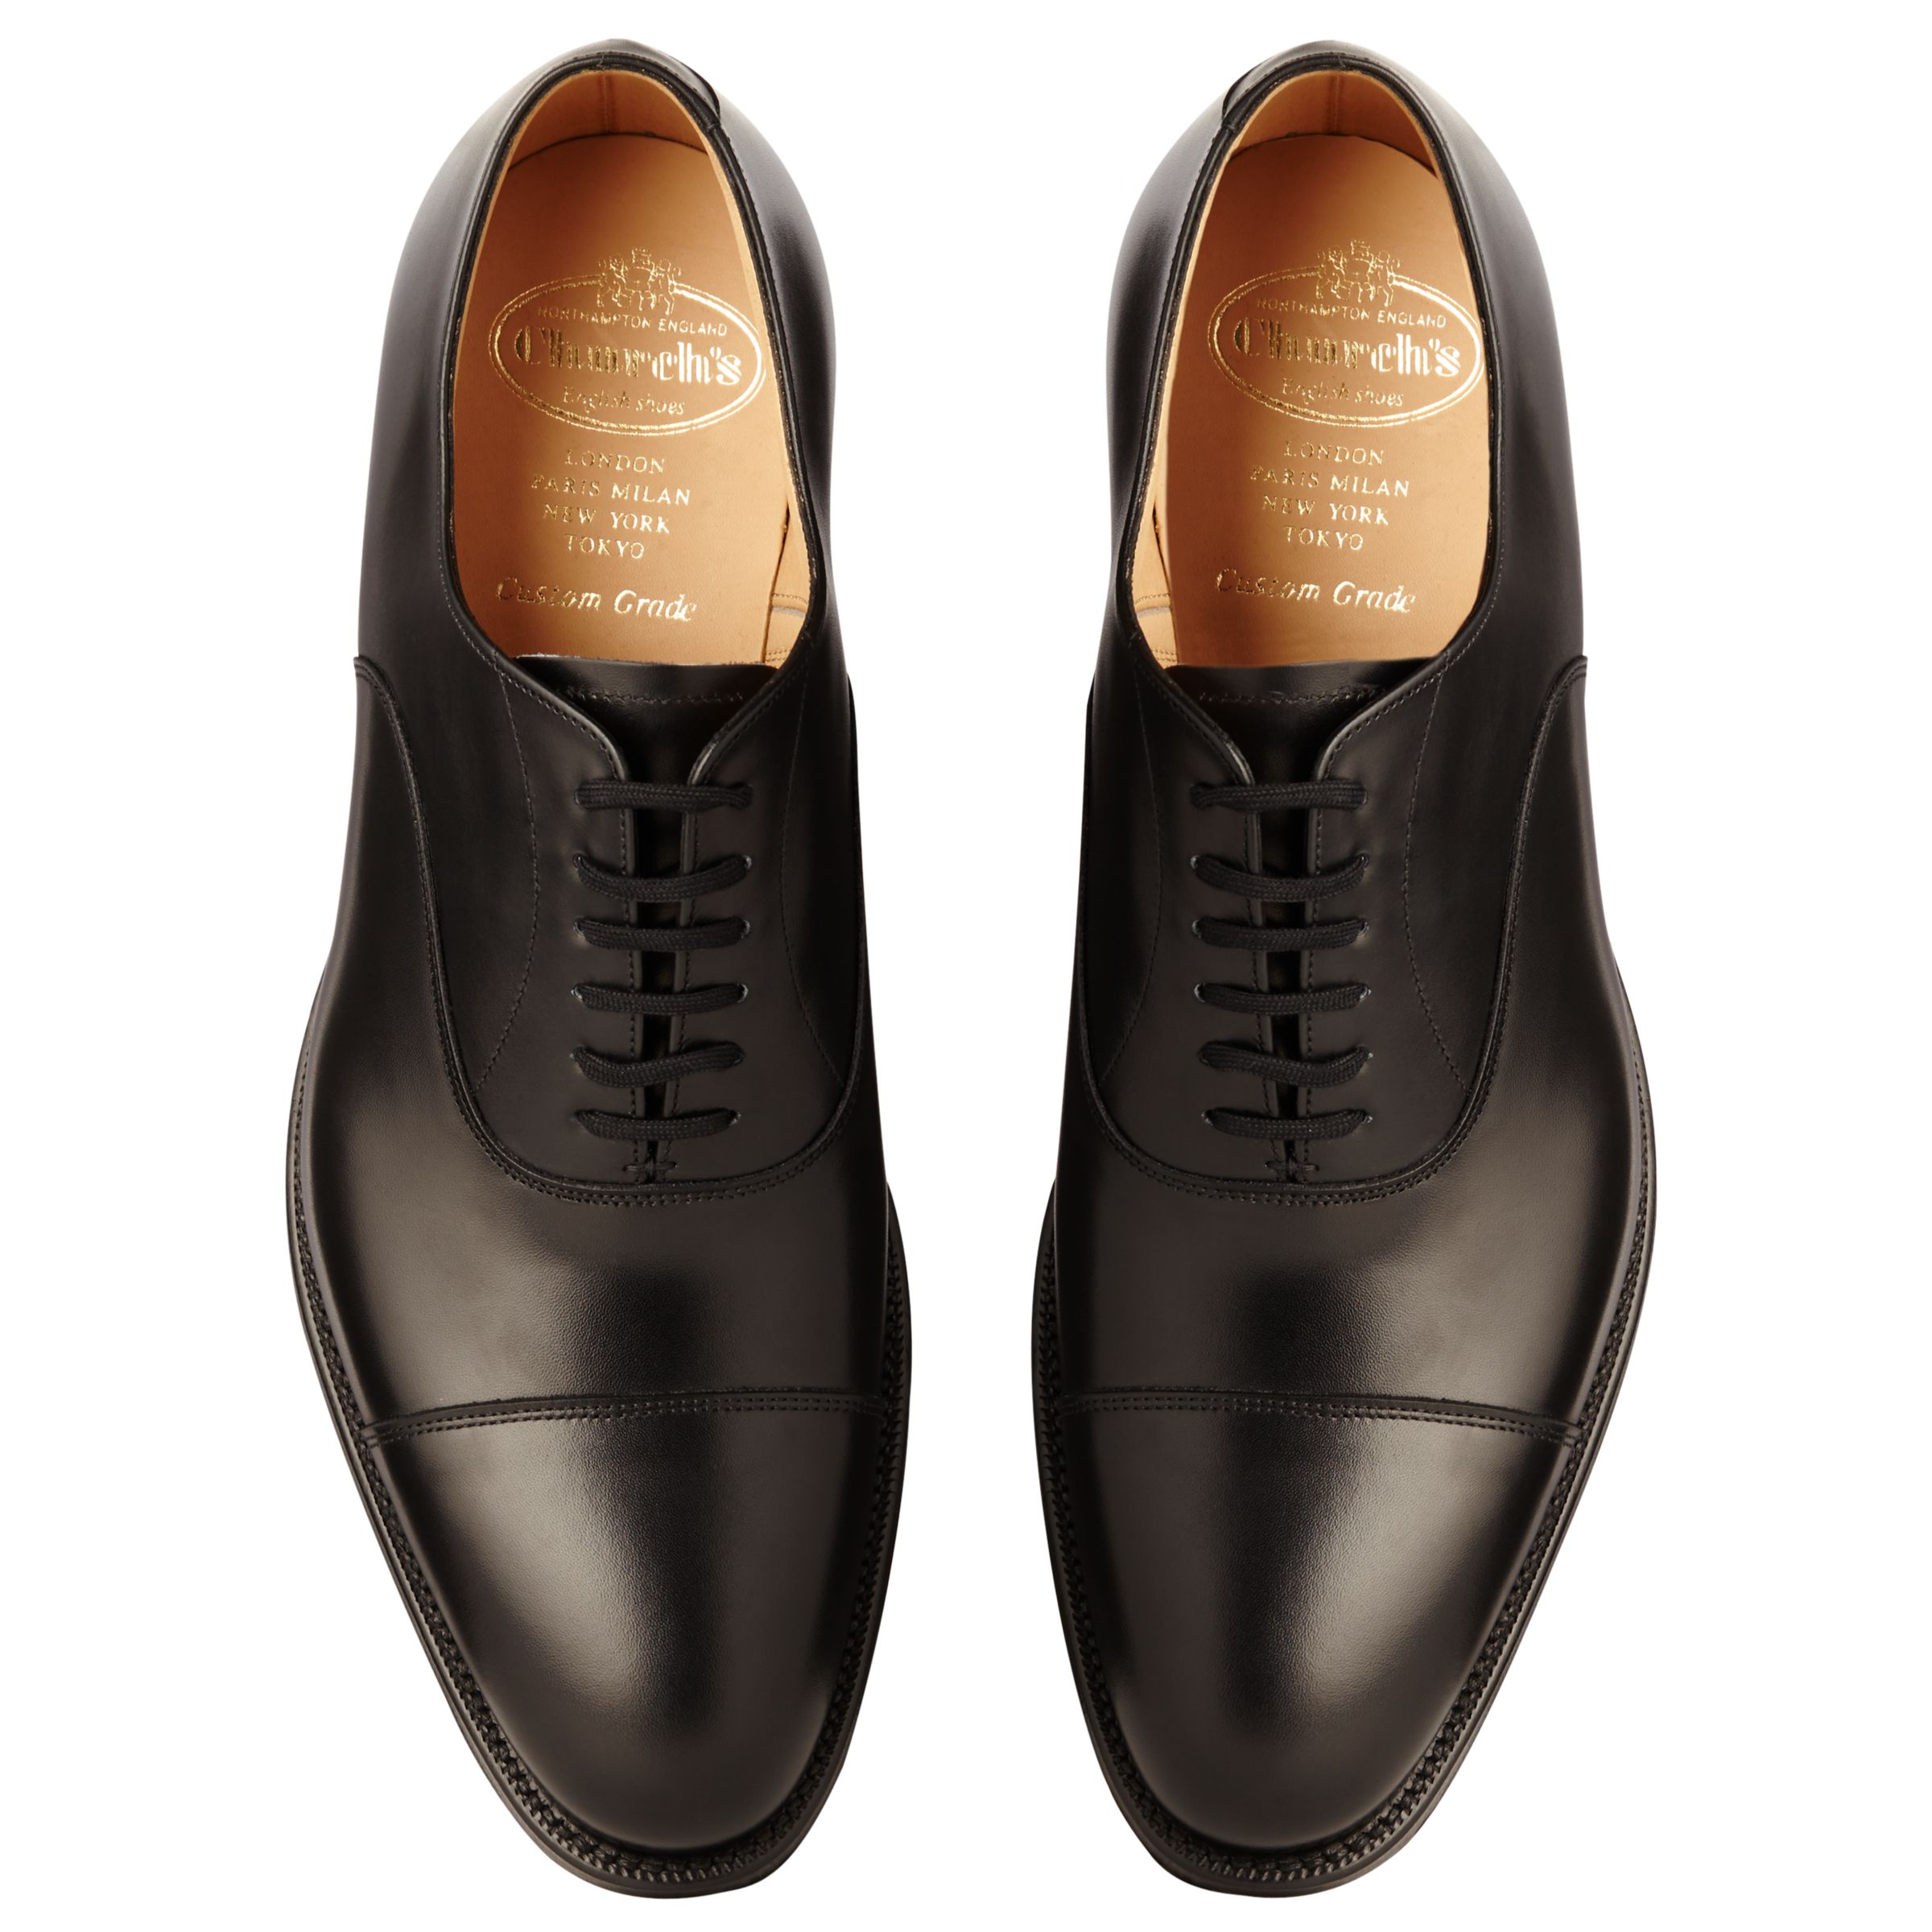 Church's Dubai Leather Oxford Shoes, Black at John Lewis